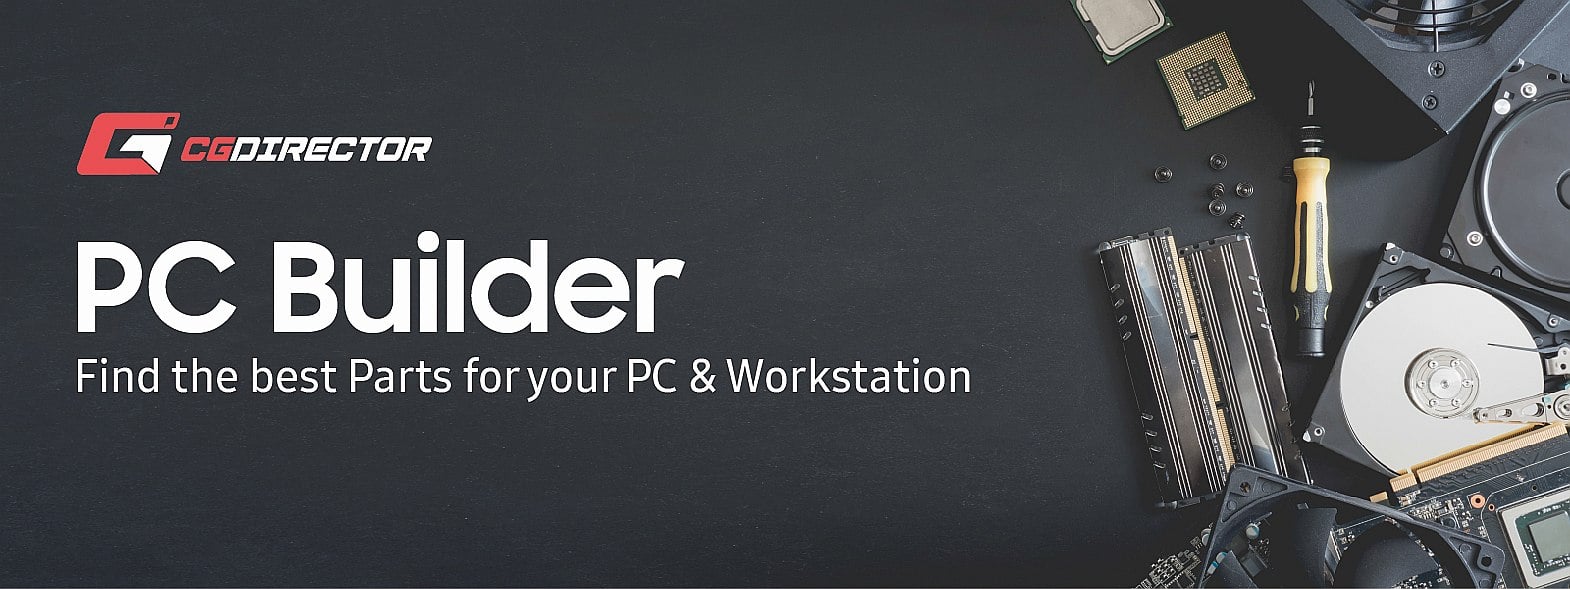 CGDirector PC-Builder